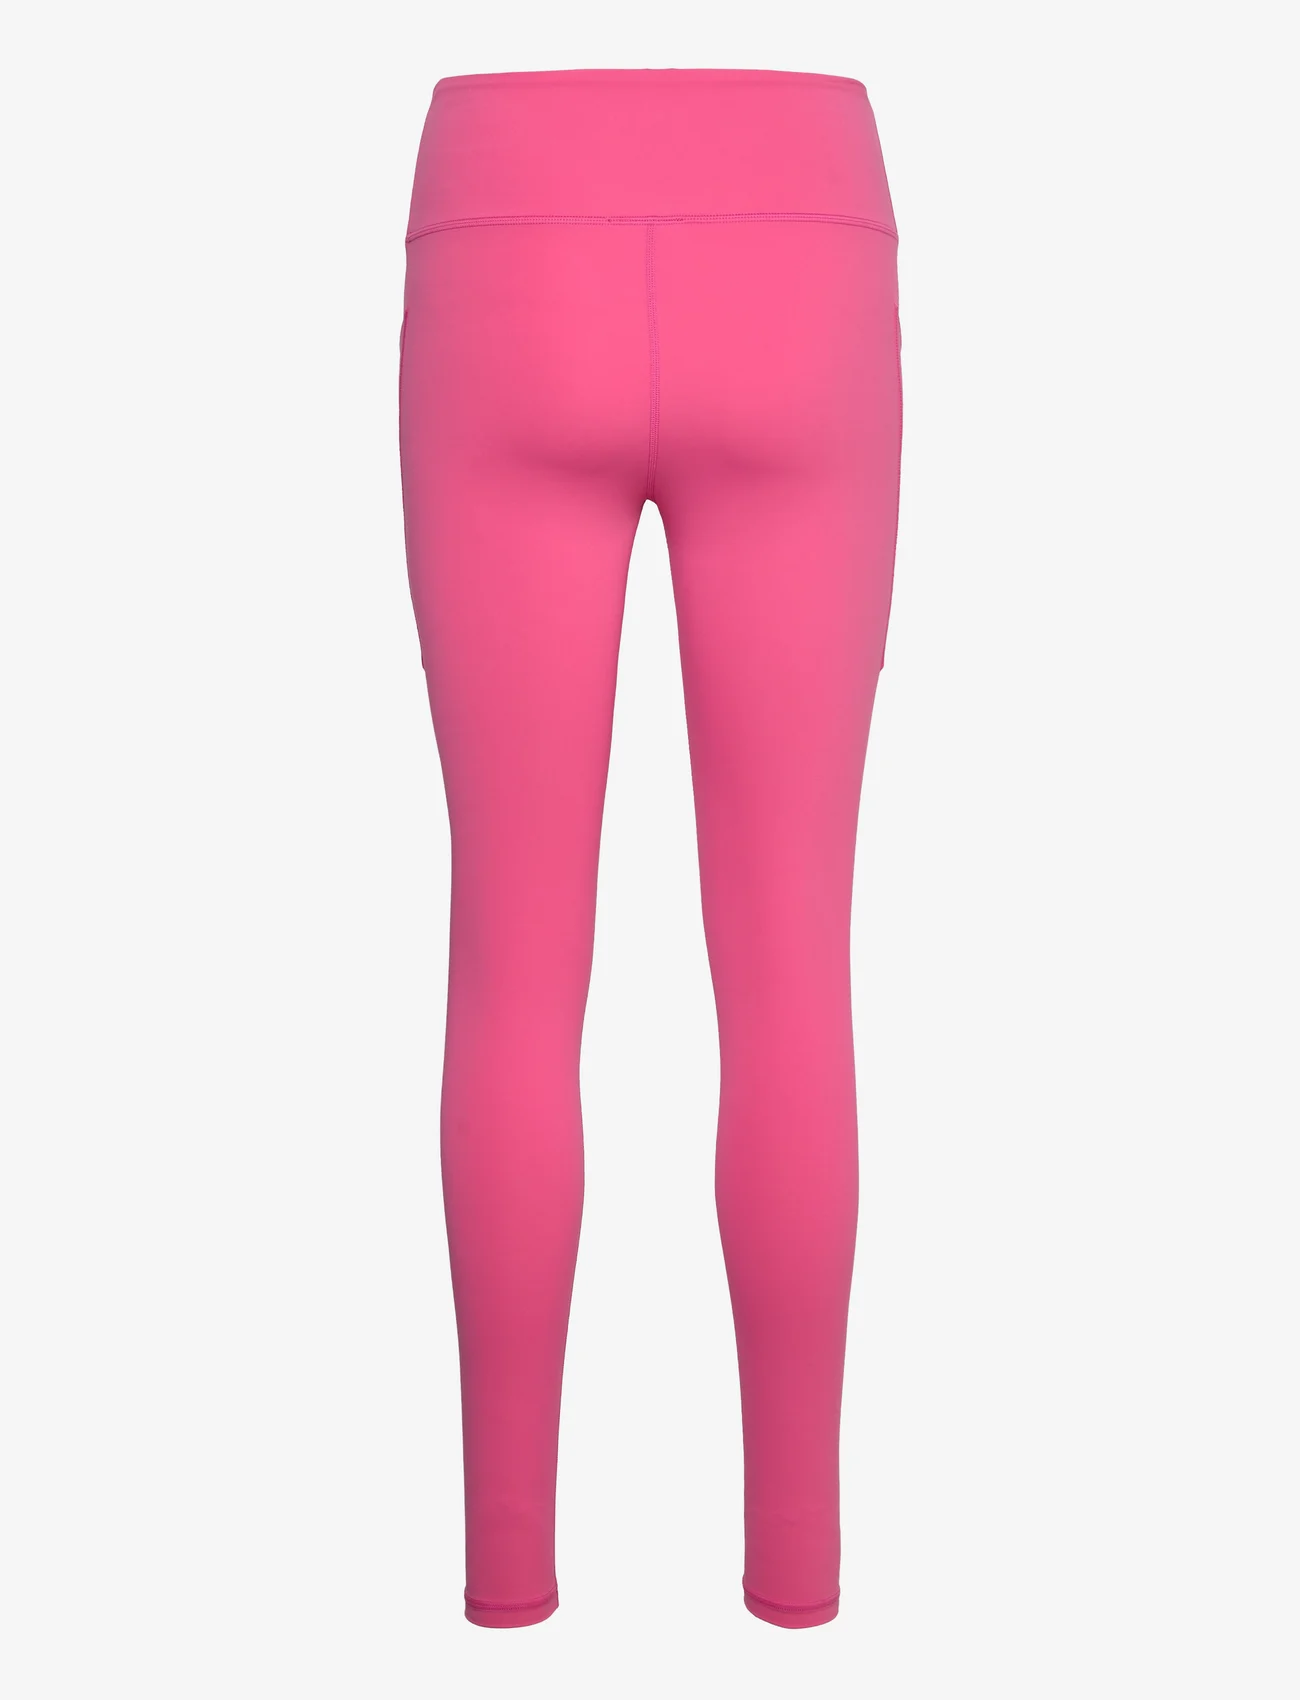 RS Sports - Women’s Side Pocket Tights - bėgimo ir sportinės tamprės - hot pink - 1